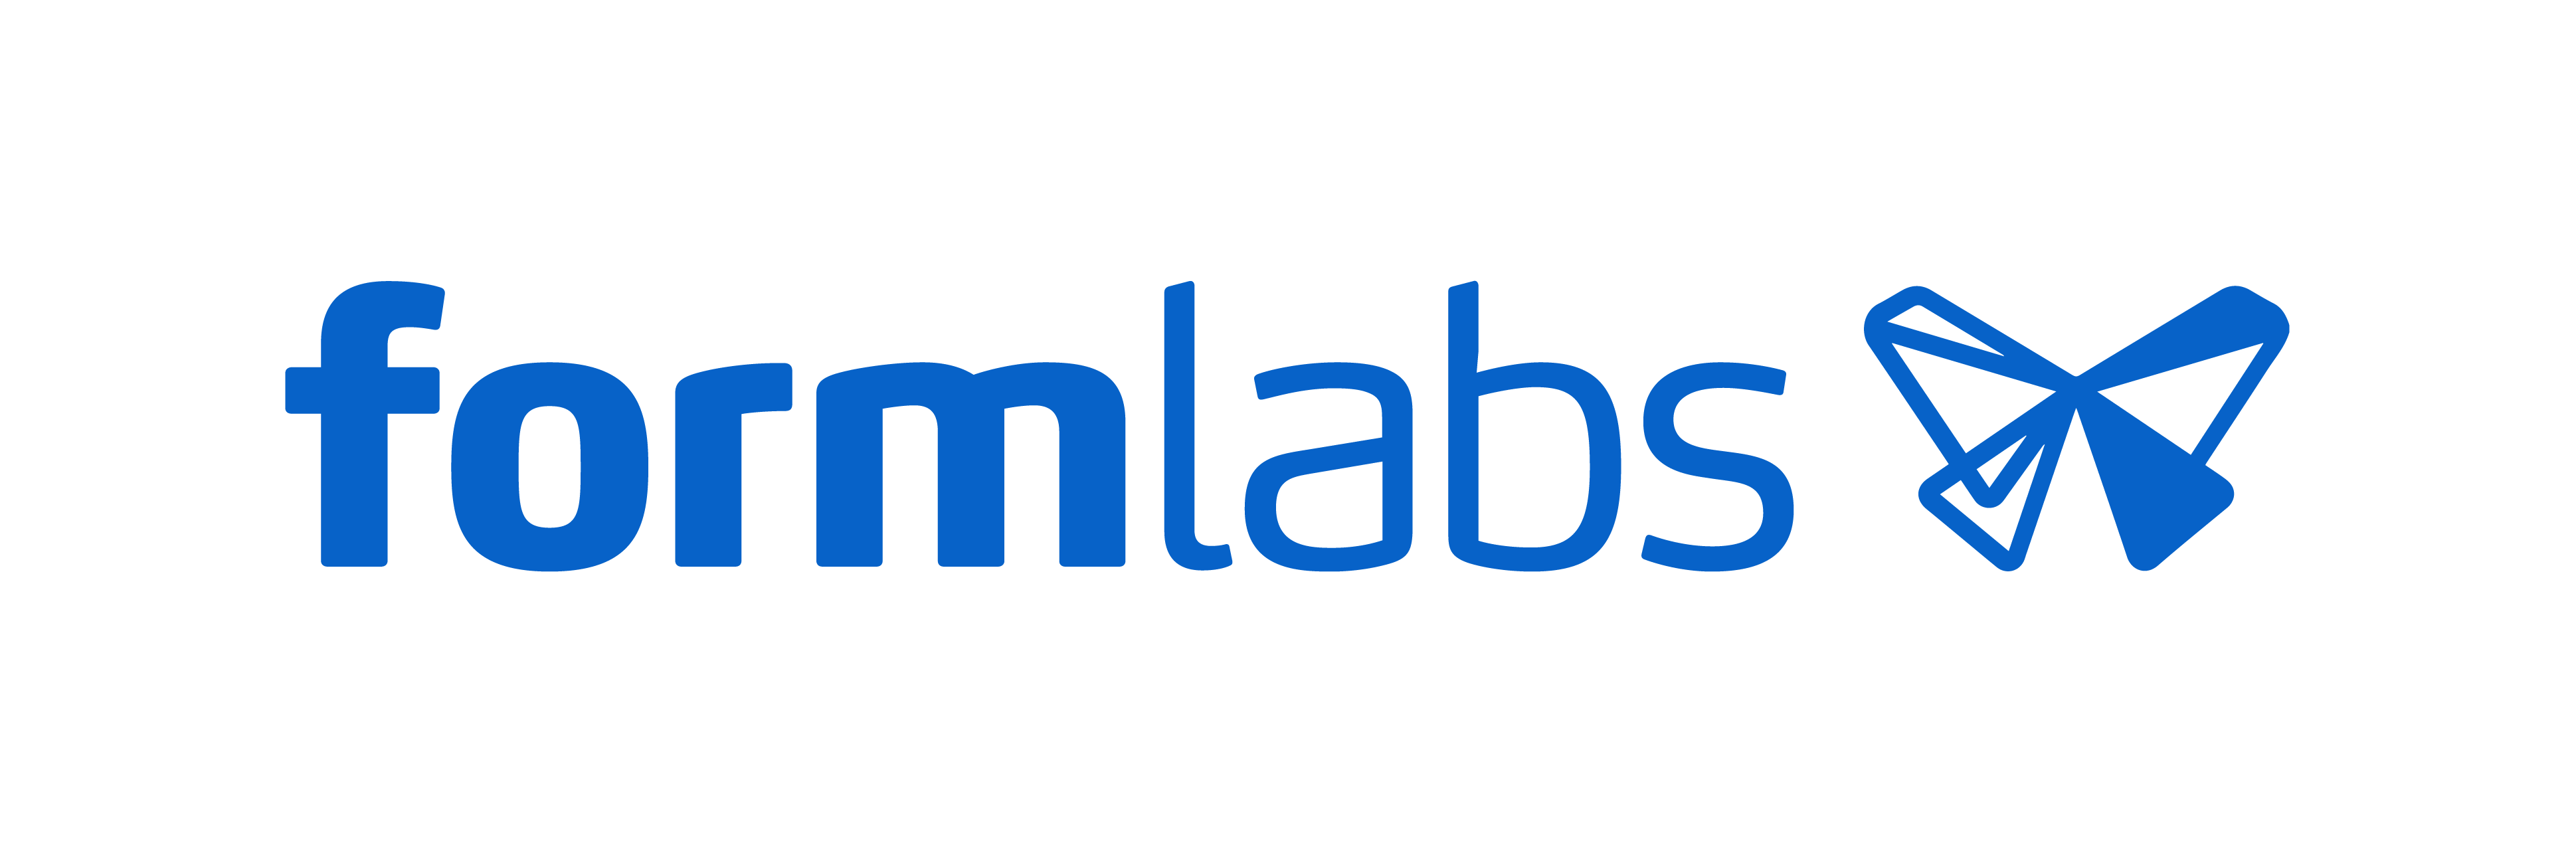 formlabs-logo